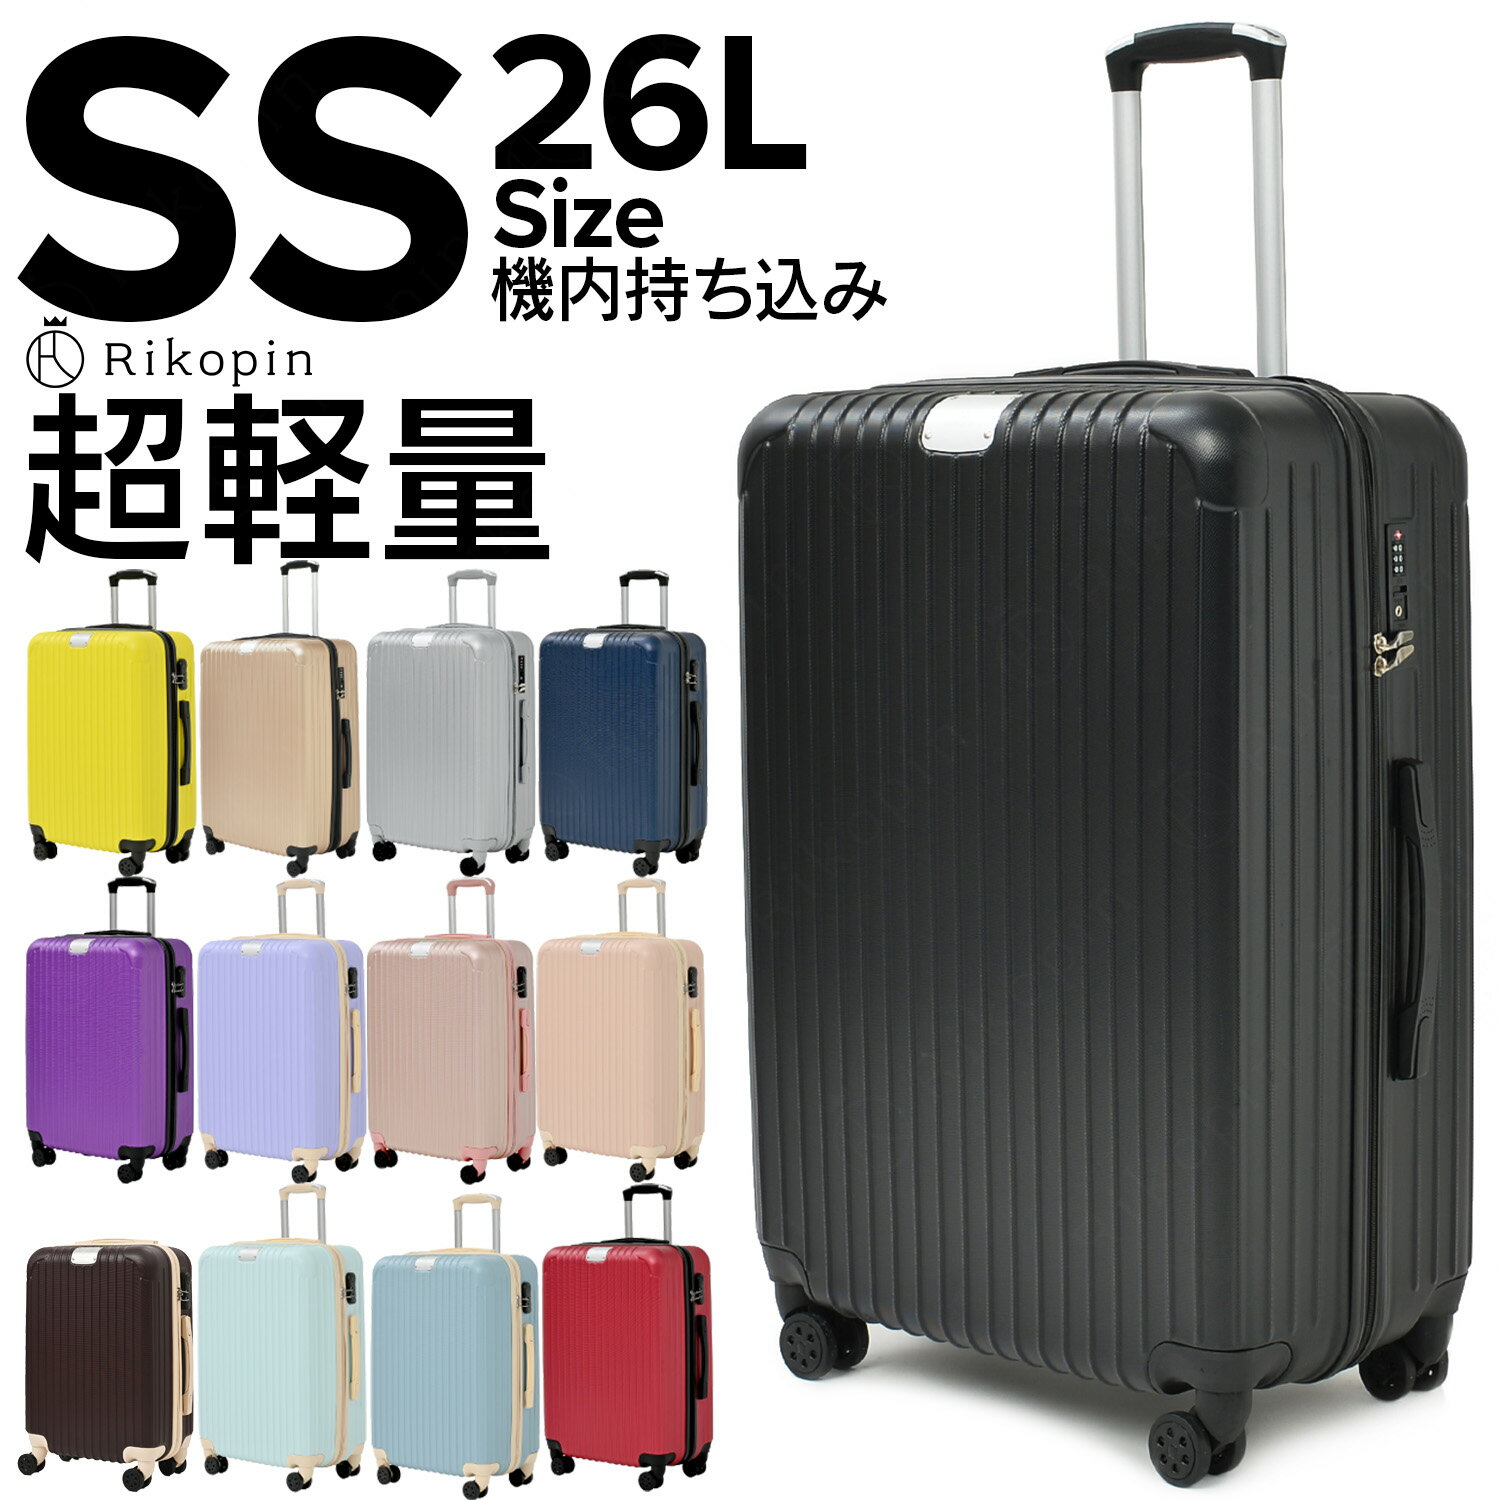 RIKOPIN SSサイズ スーツケース